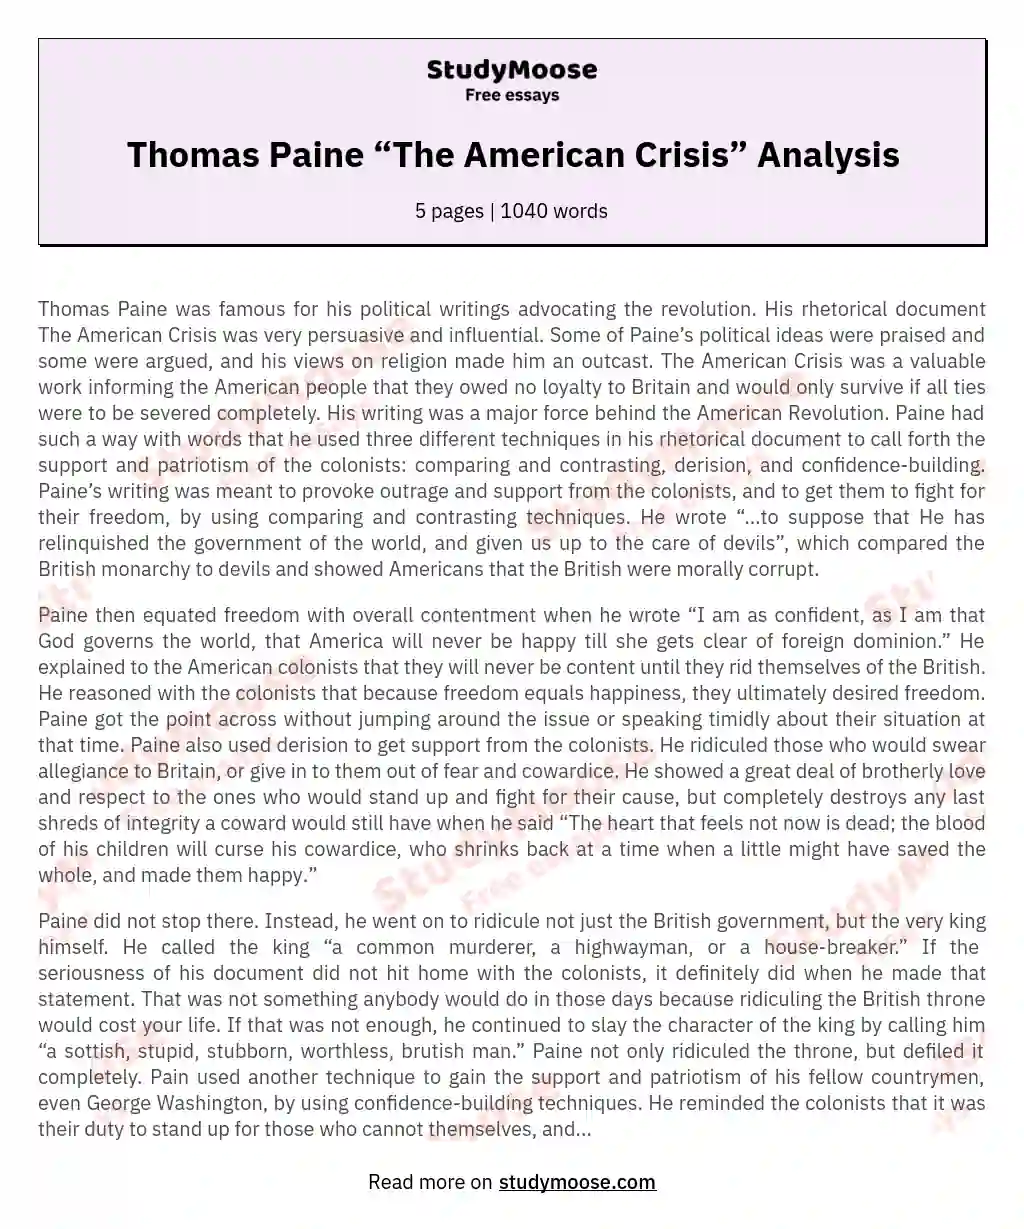 Thomas Paine “The American Crisis” Analysis essay